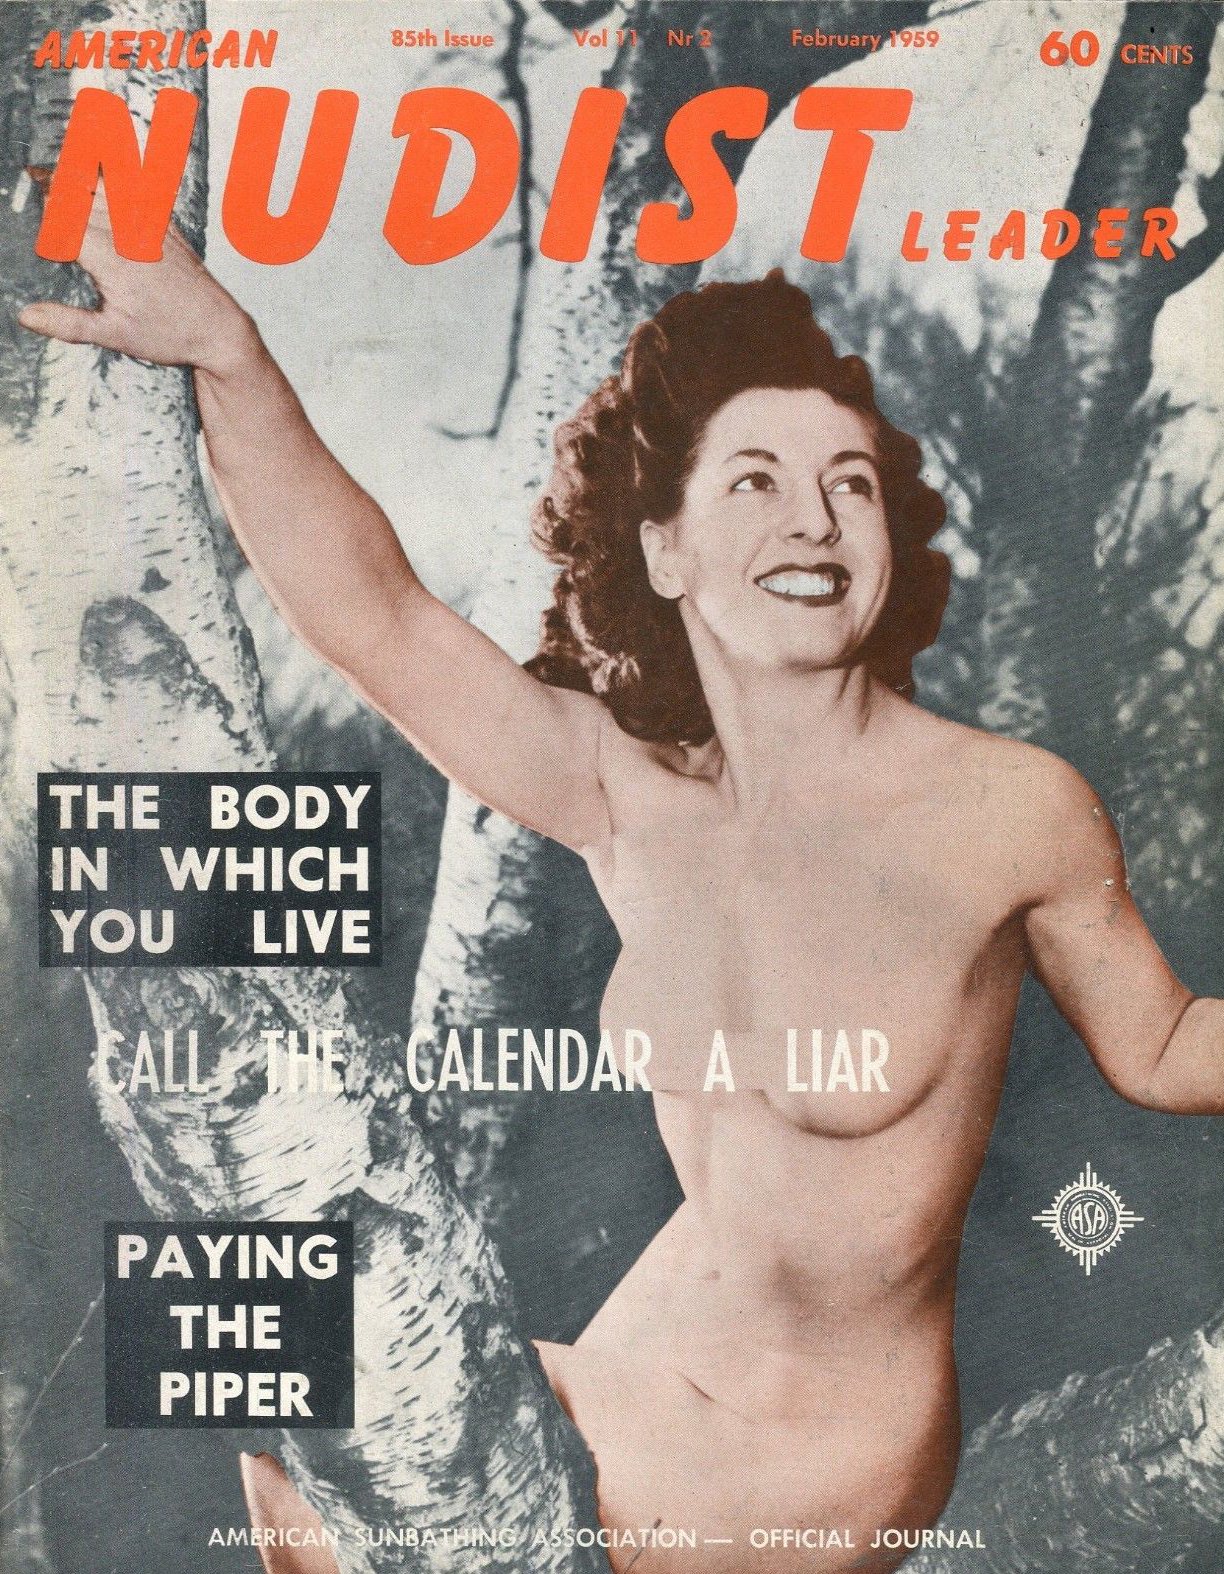 American Nudist Leader February 1959 magazine back issue American Nudist Leader magizine back copy 